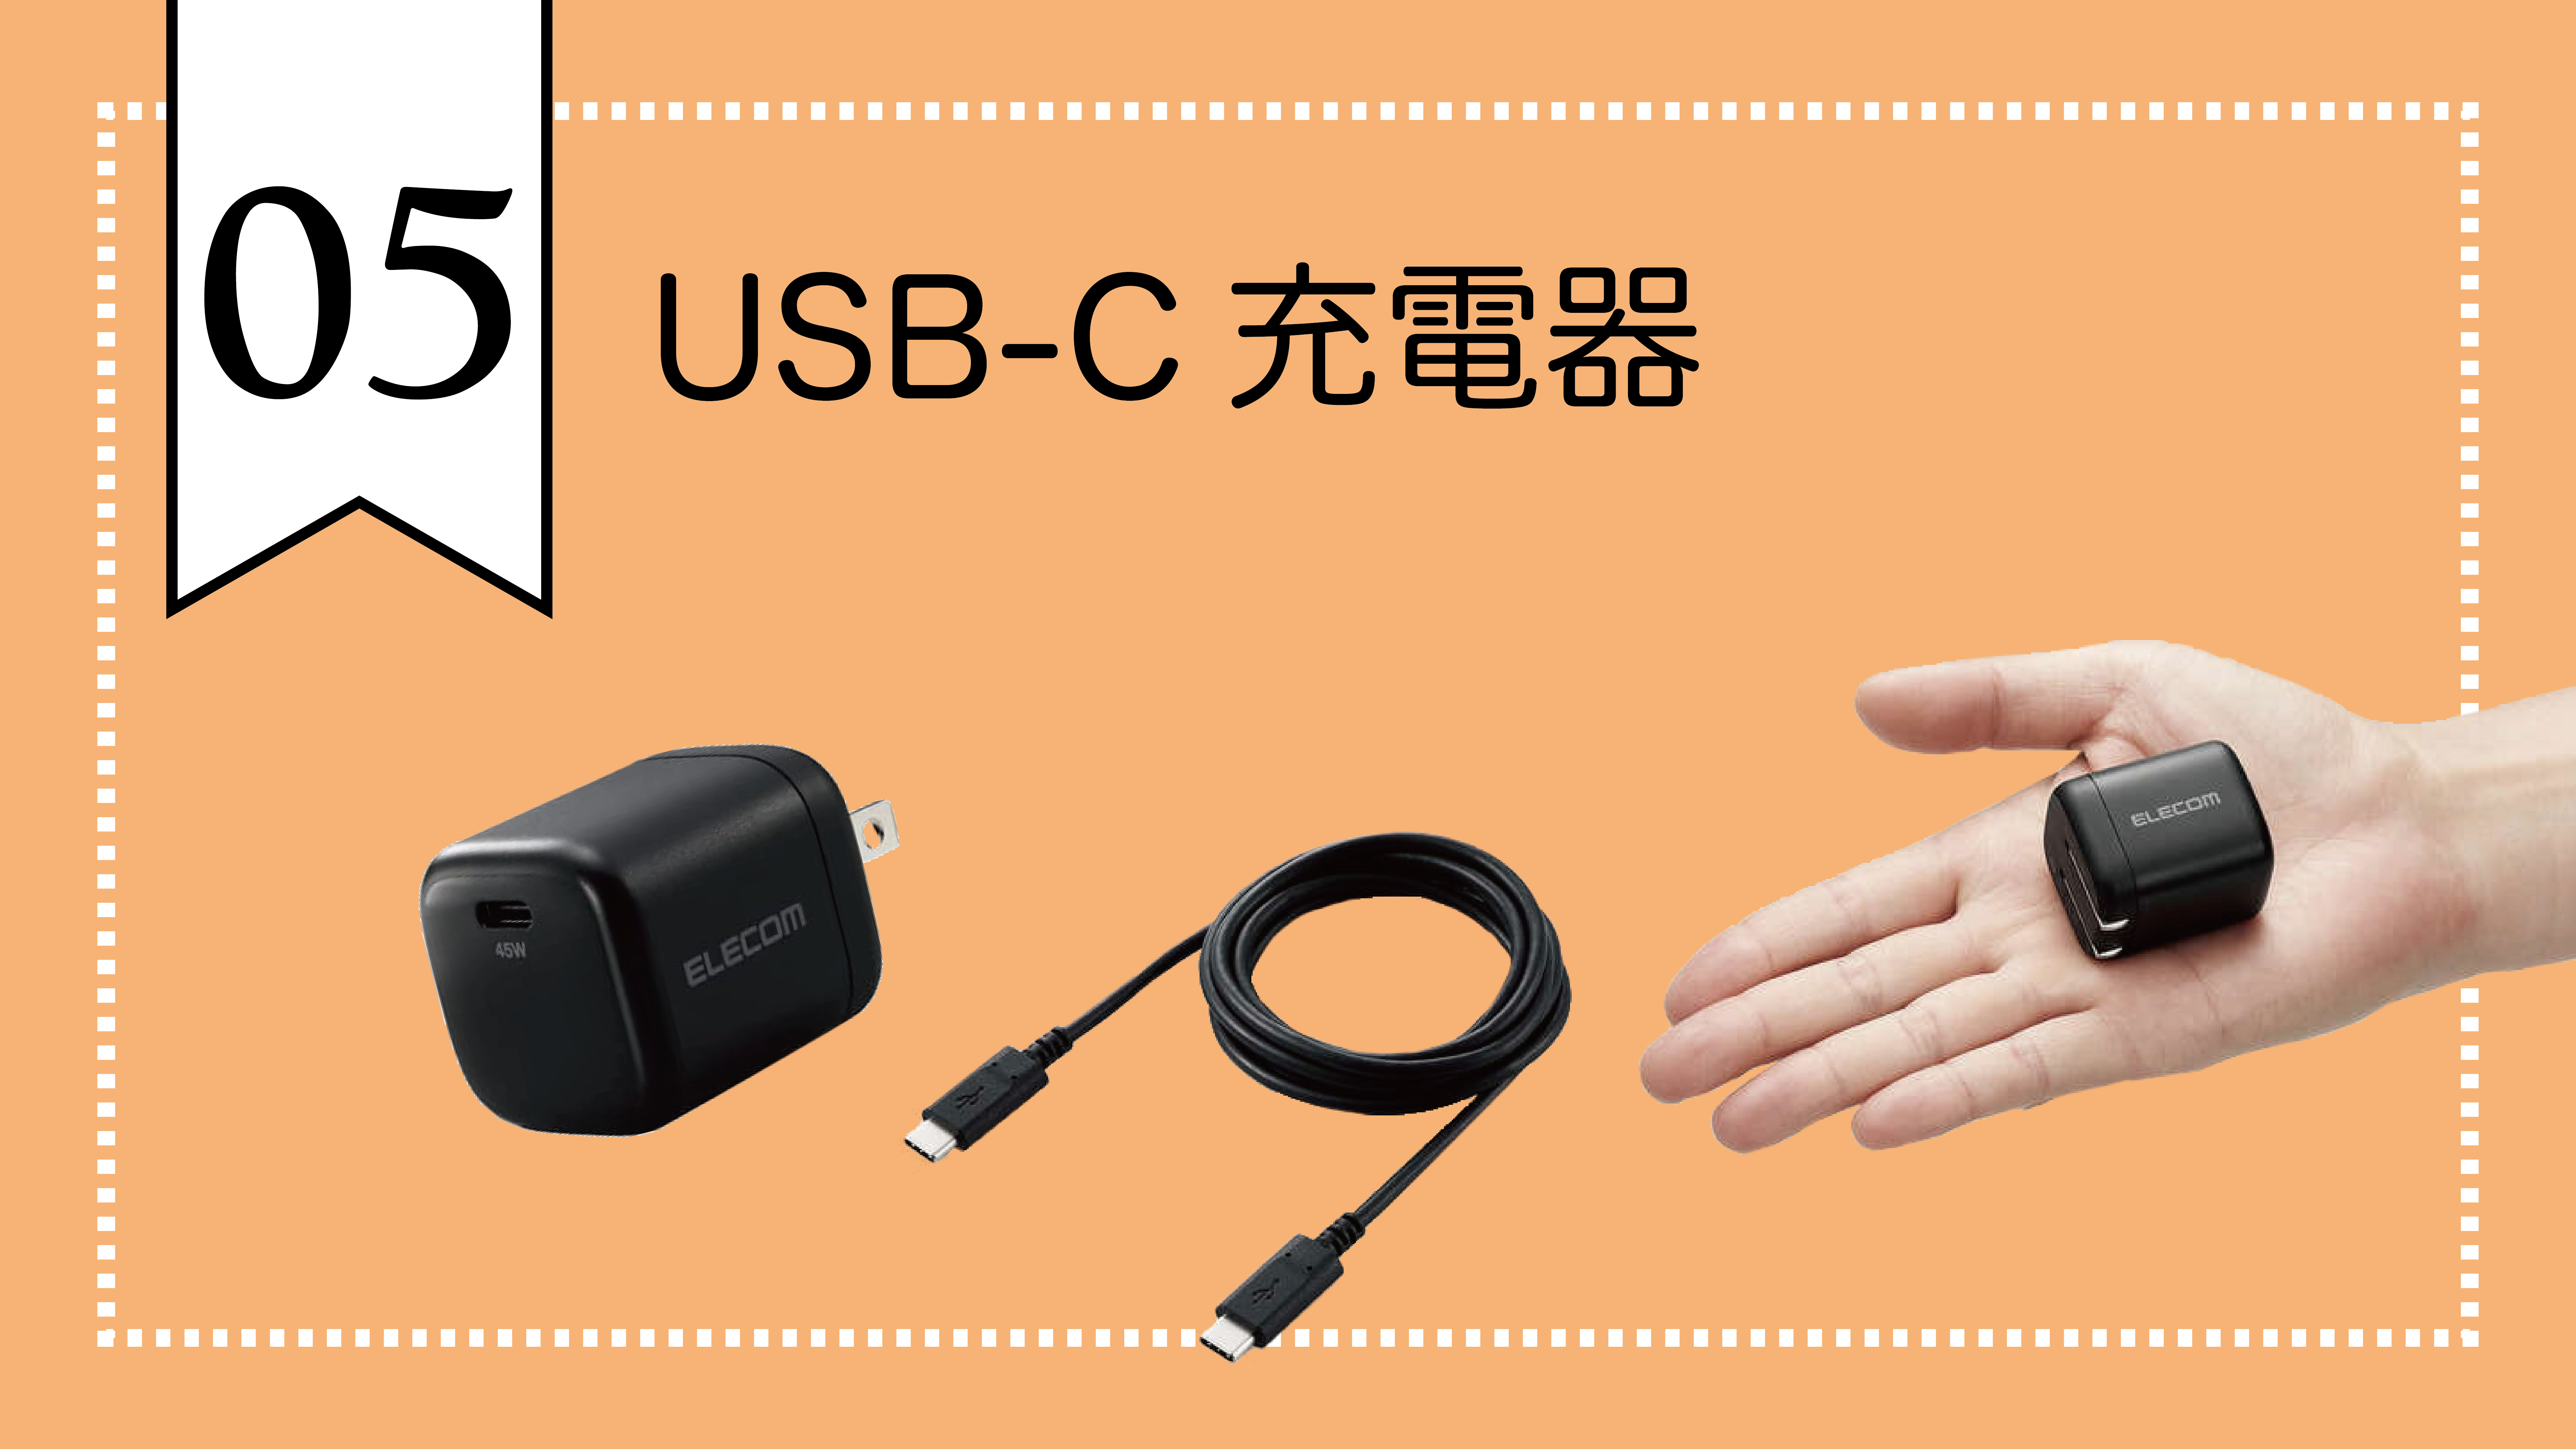 USB-C 充電器